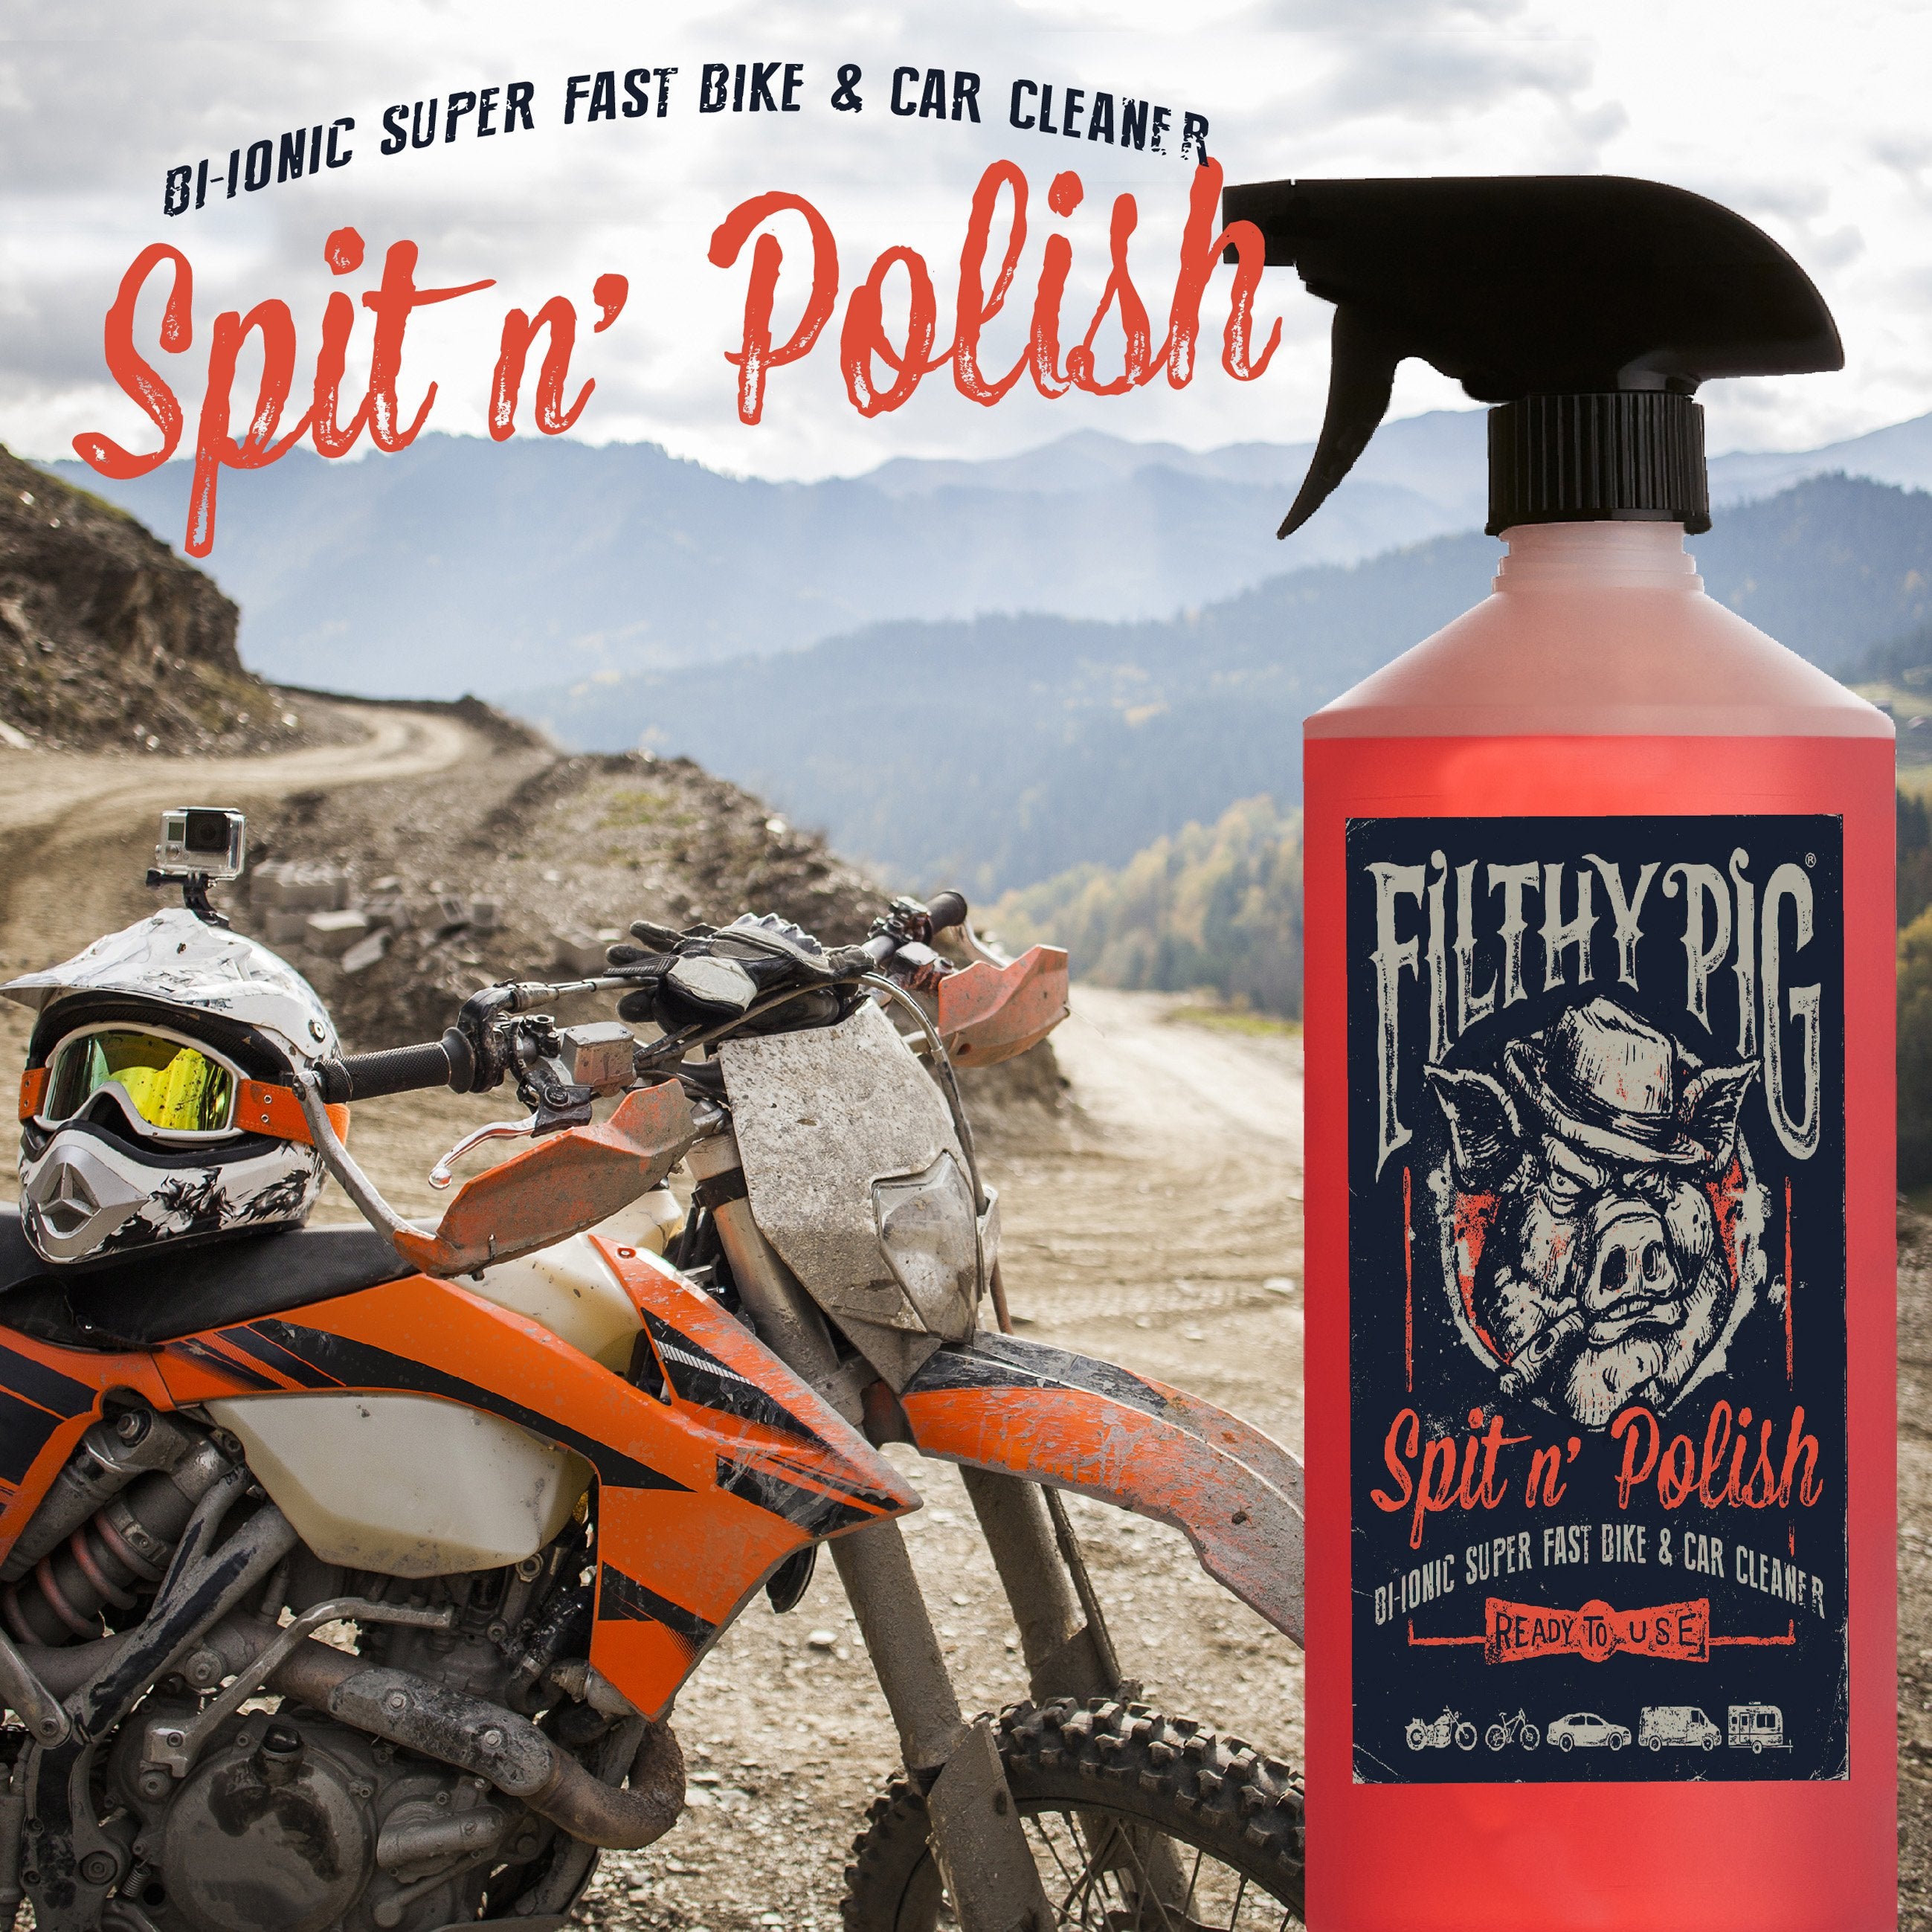 Filthy Pig Spit n Polish Dirt Remover - 1 Litre refill bottle